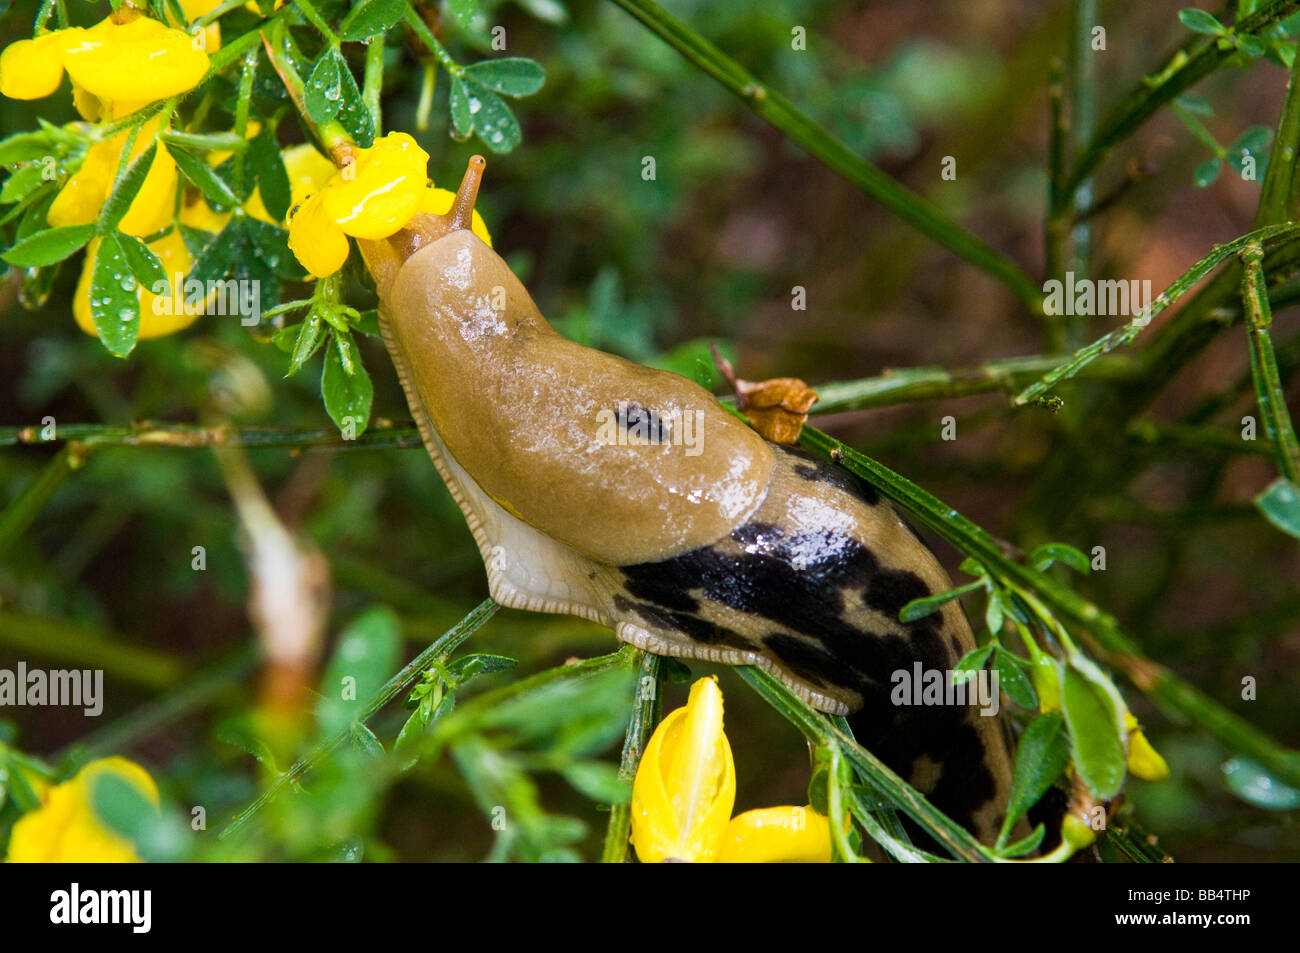 USA, WA, Whidbey Island. Banana slug (Ariolimax columbianus) on Scotch Broom.  Large variety of slugs in damp Pacific Northwest Stock Photo